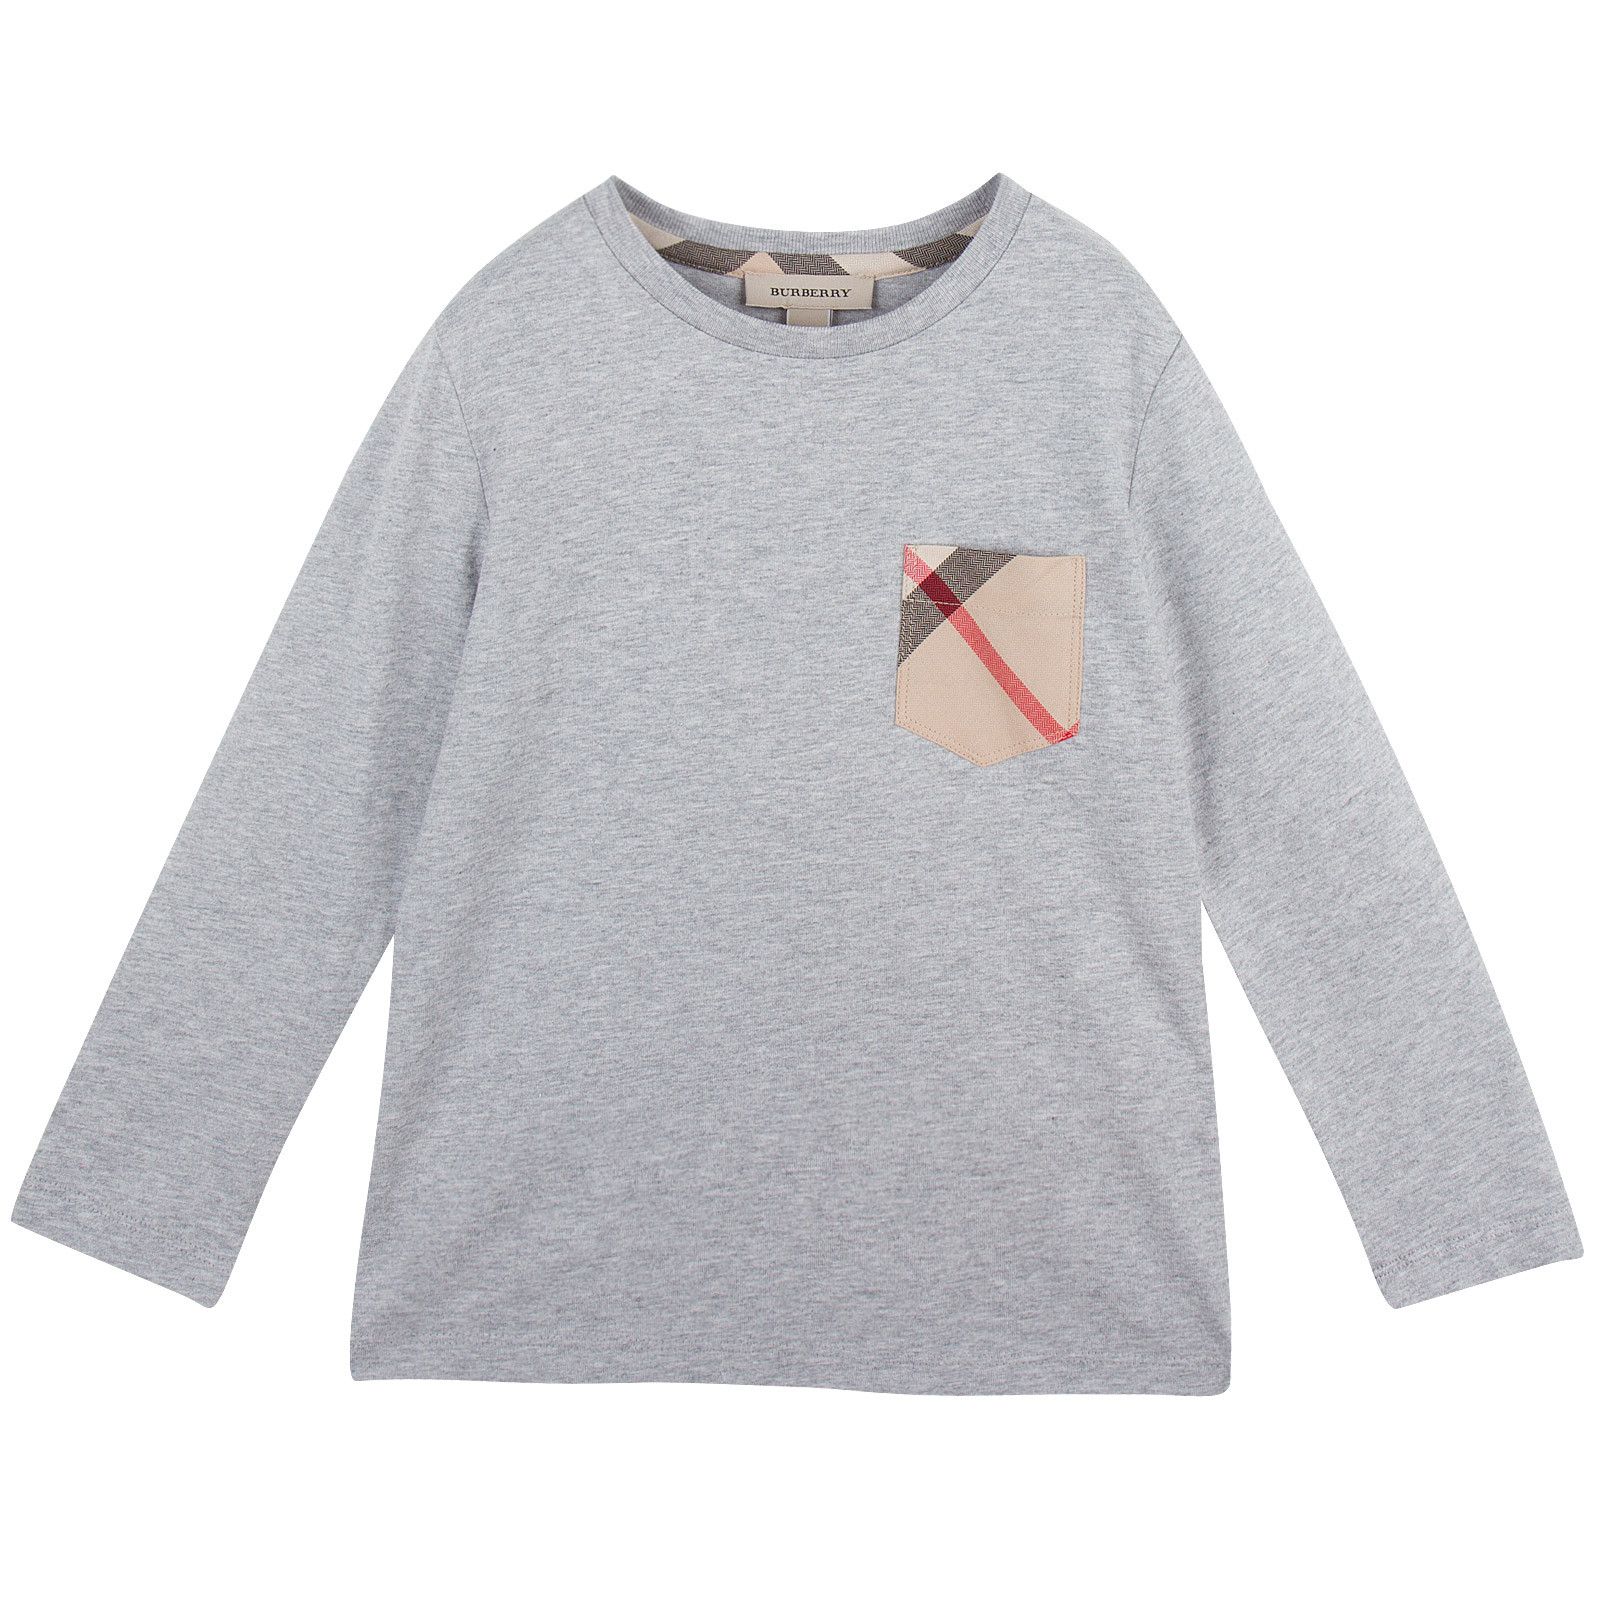 Boys Grey Cotton T-Shirts With Check Pocket - CÉMAROSE | Children's Fashion Store - 1